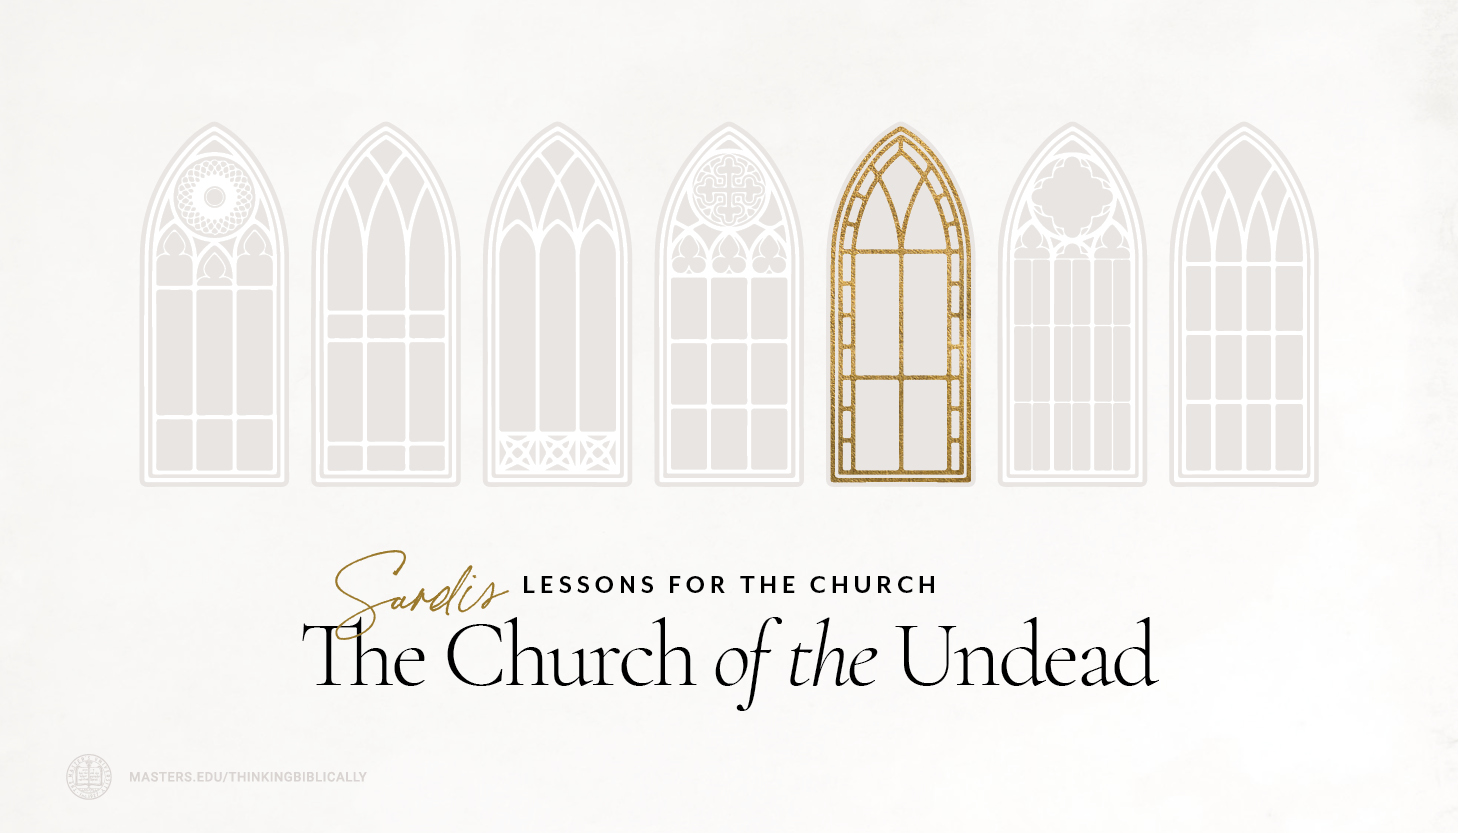 Sardis: The Church of the Undead